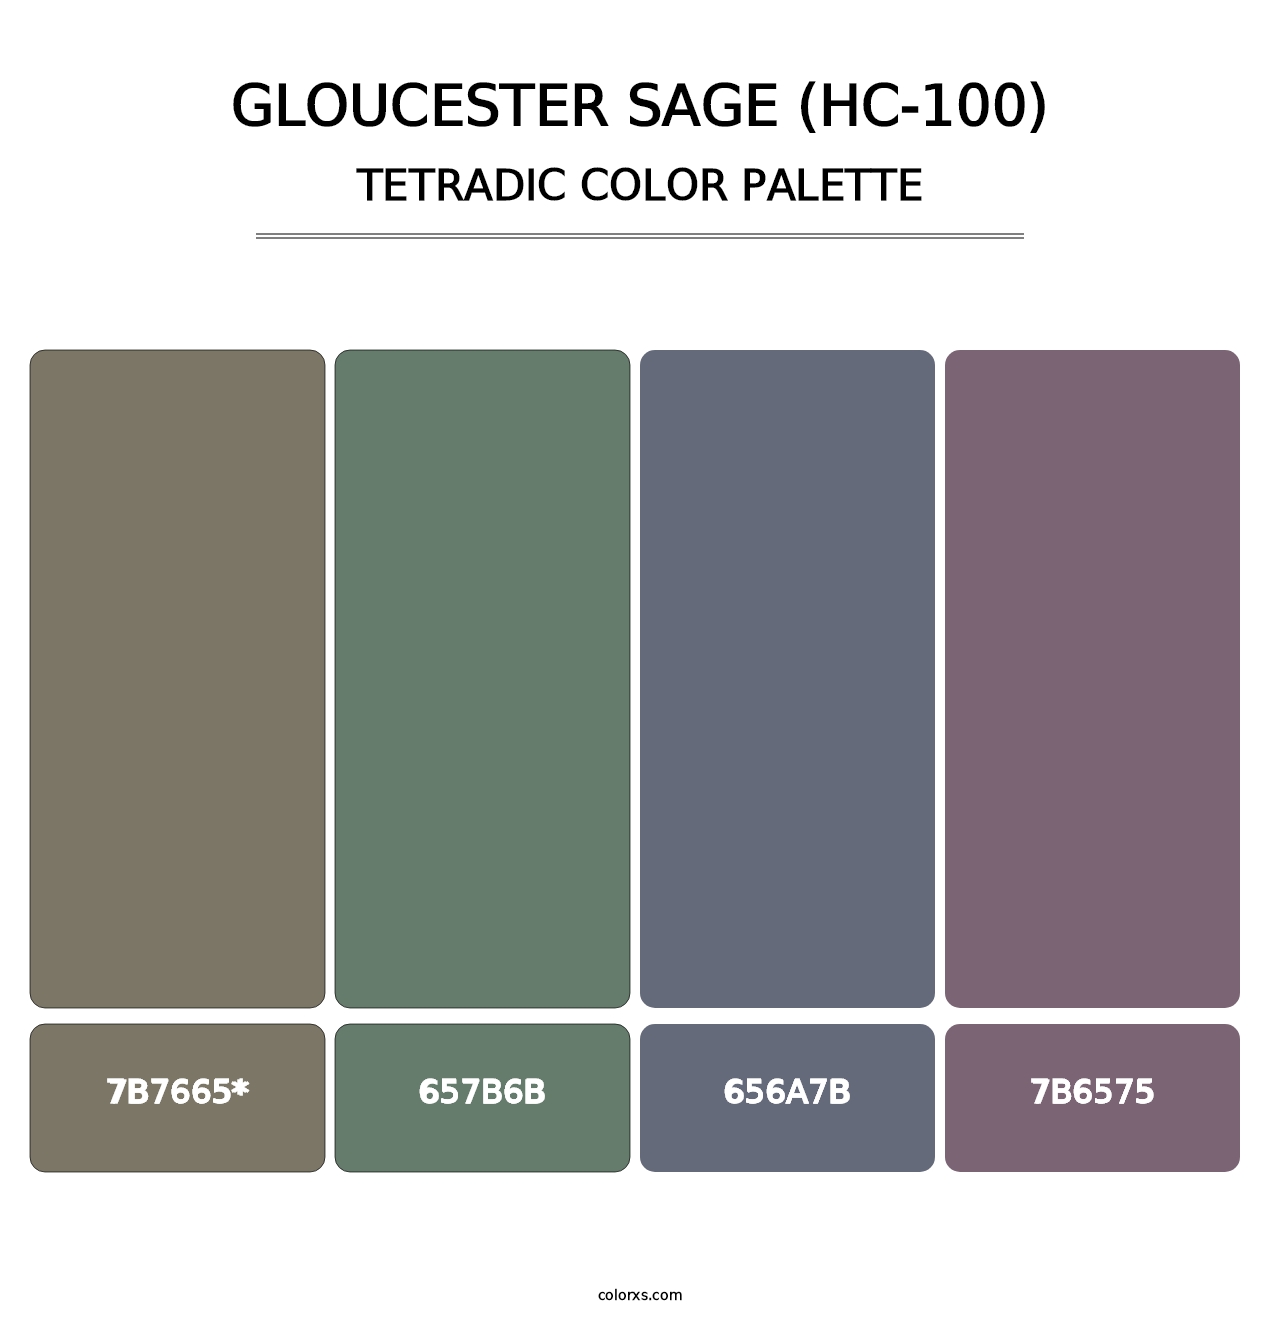 Gloucester Sage (HC-100) - Tetradic Color Palette